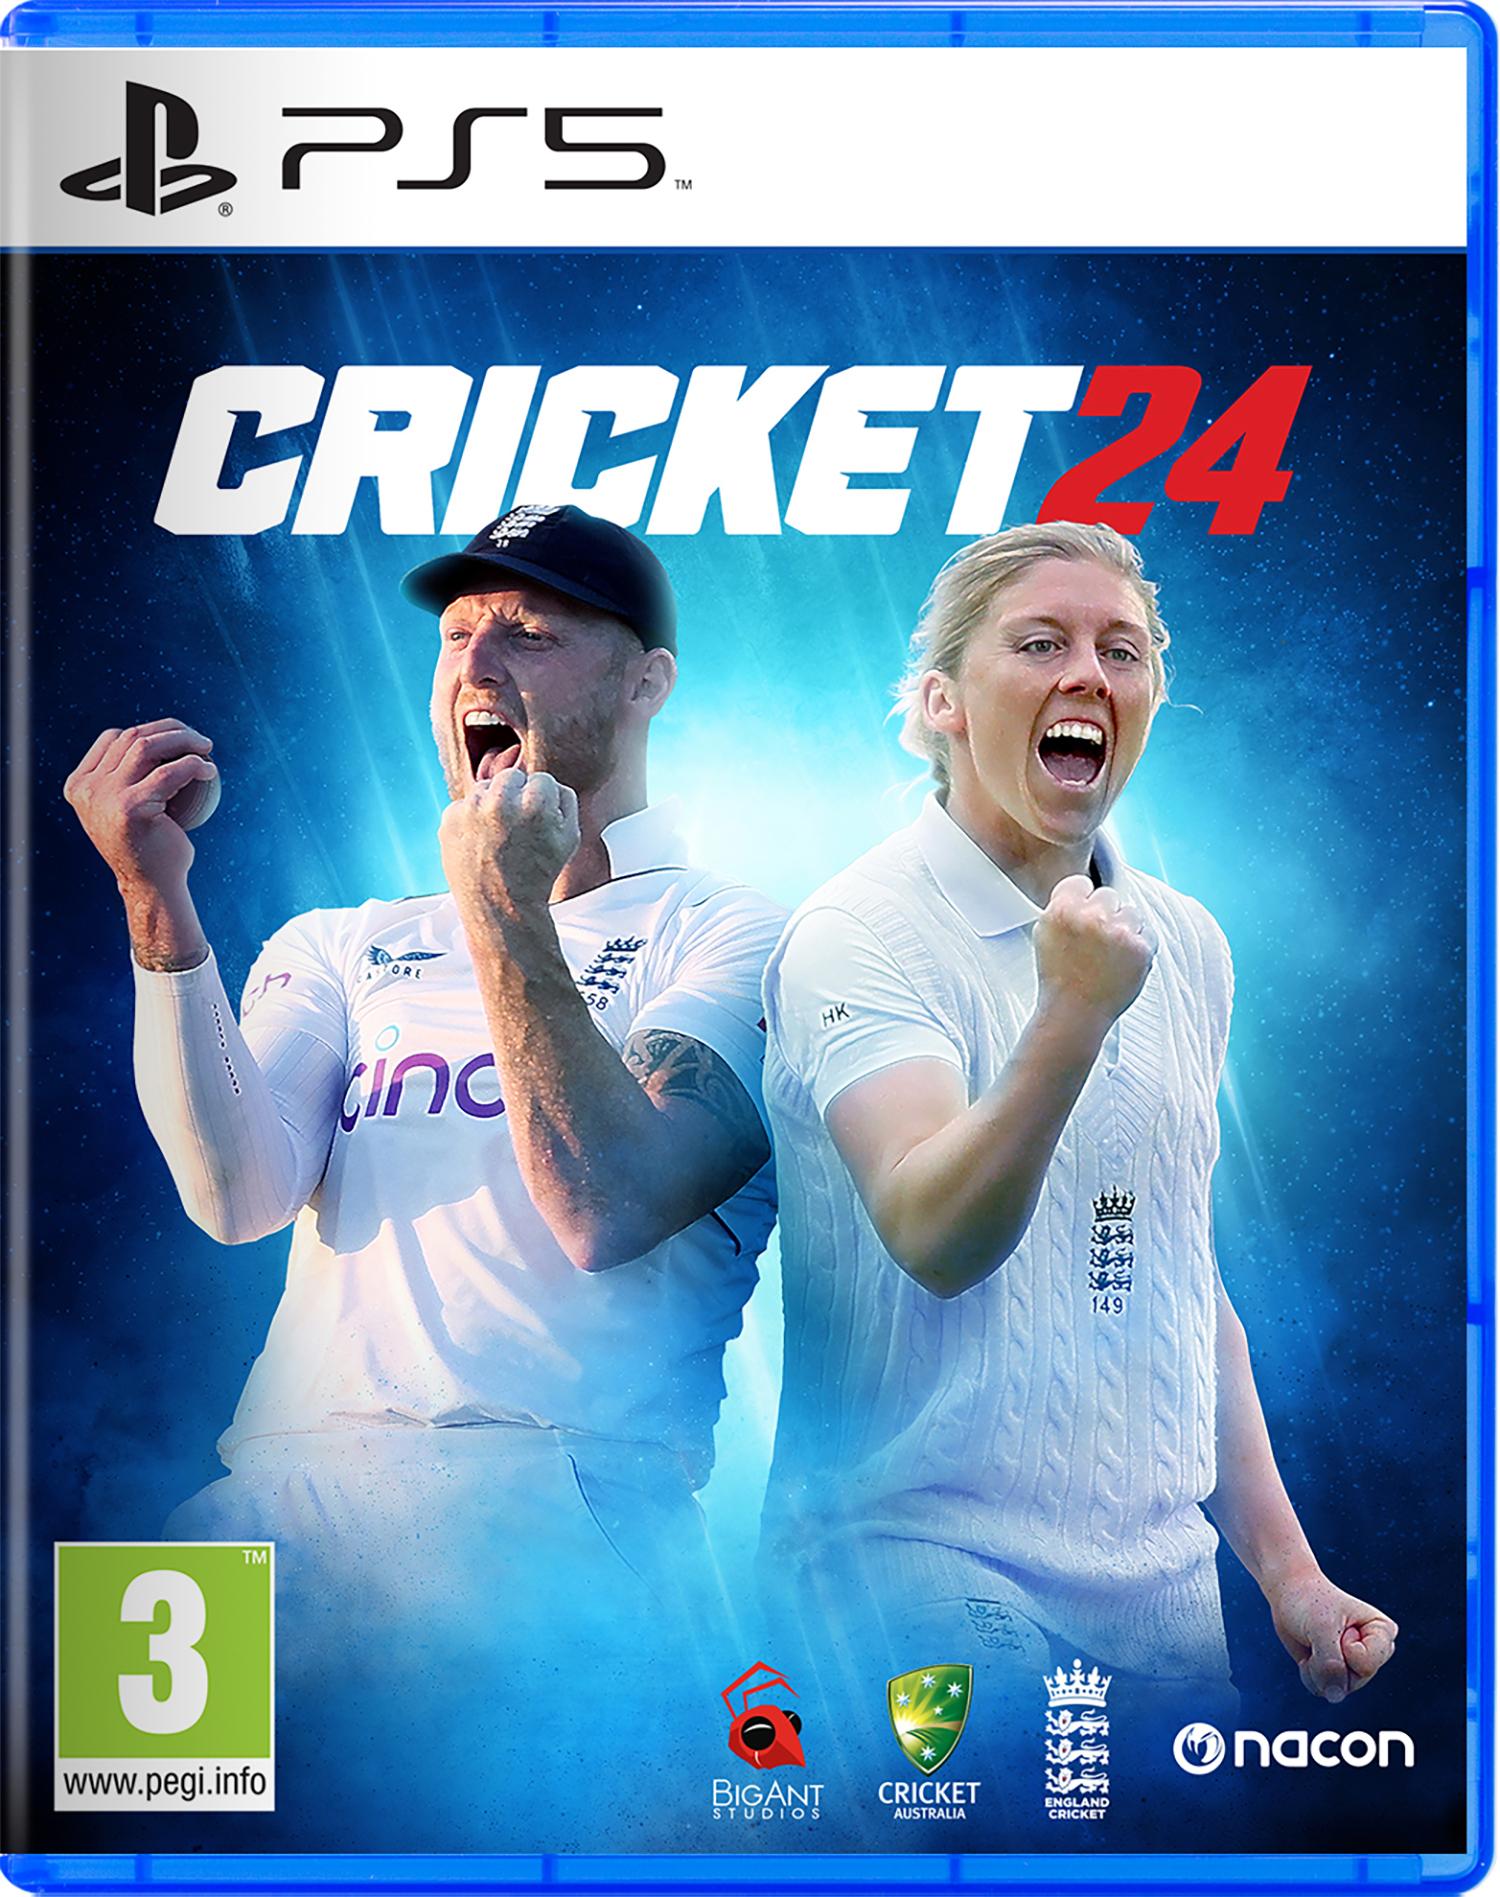 PLAYSTATION Cricket 24 - PS5